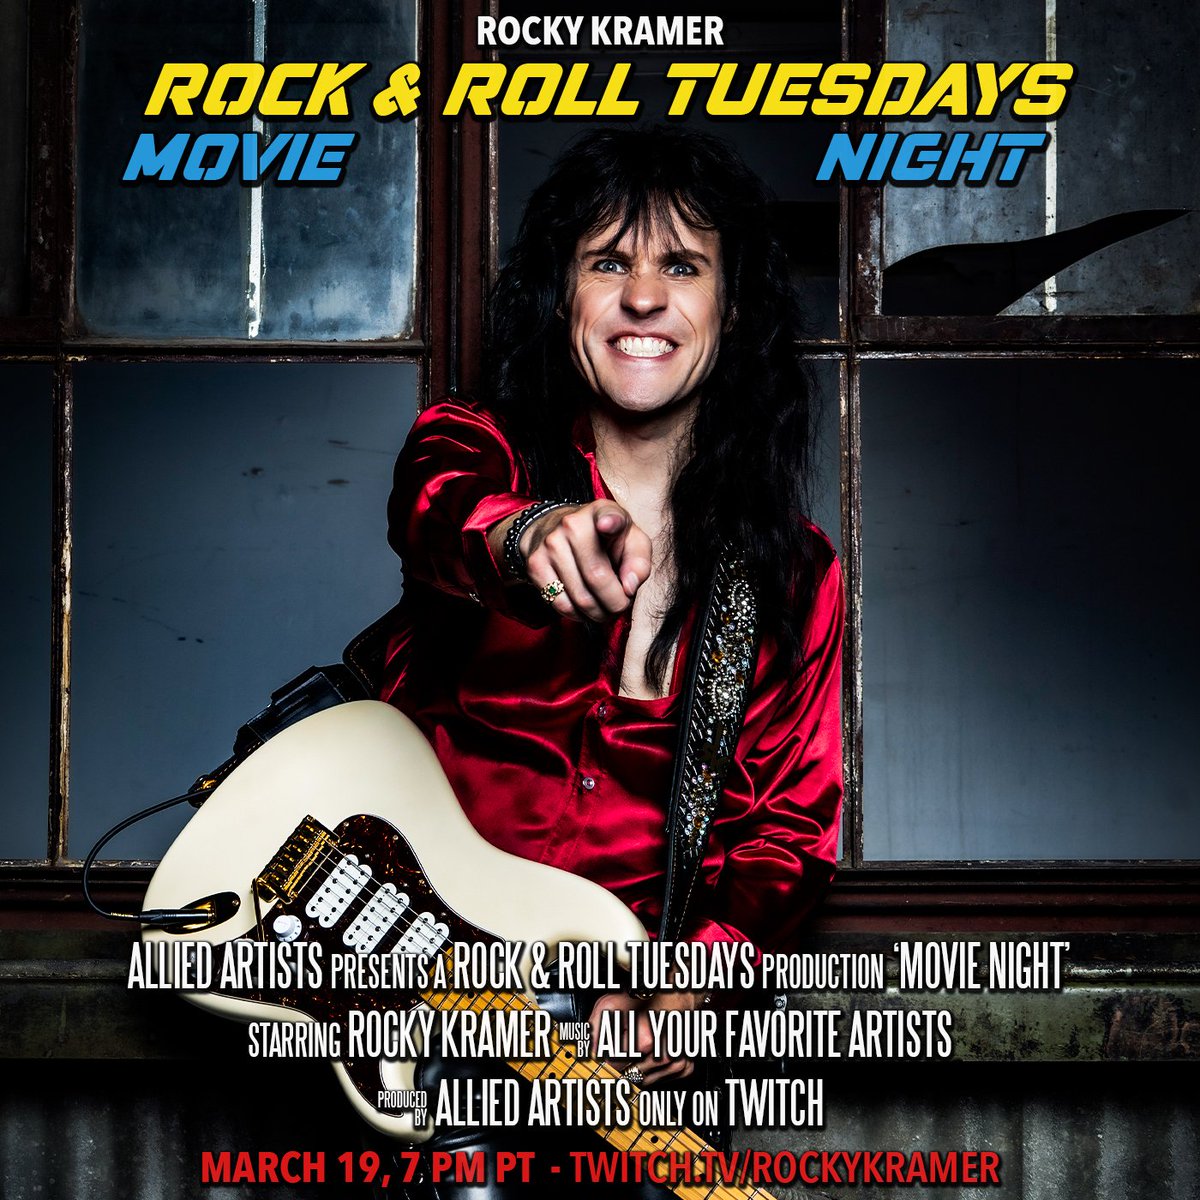 Rock & Roll Tuesdays: Movie Night March 19, 7 PM PT Twitch.tv/rockykramer #RockNRoll #Guitarist